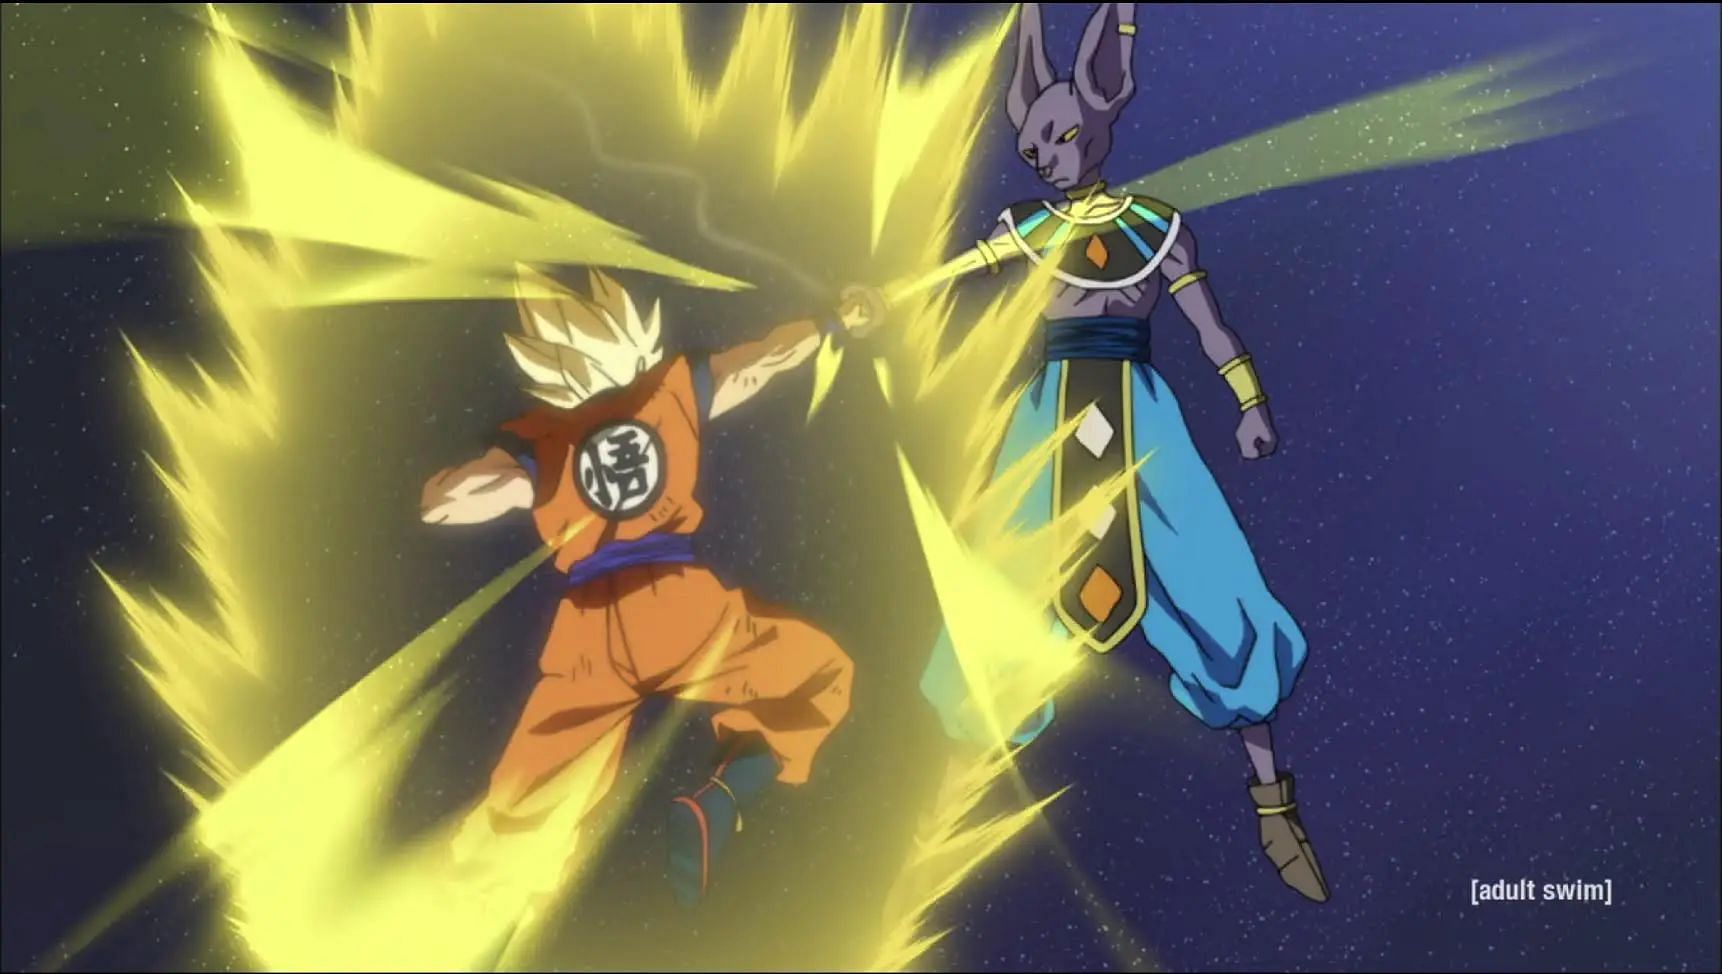 Beerus dominated Goku (Image via Toei Animation)